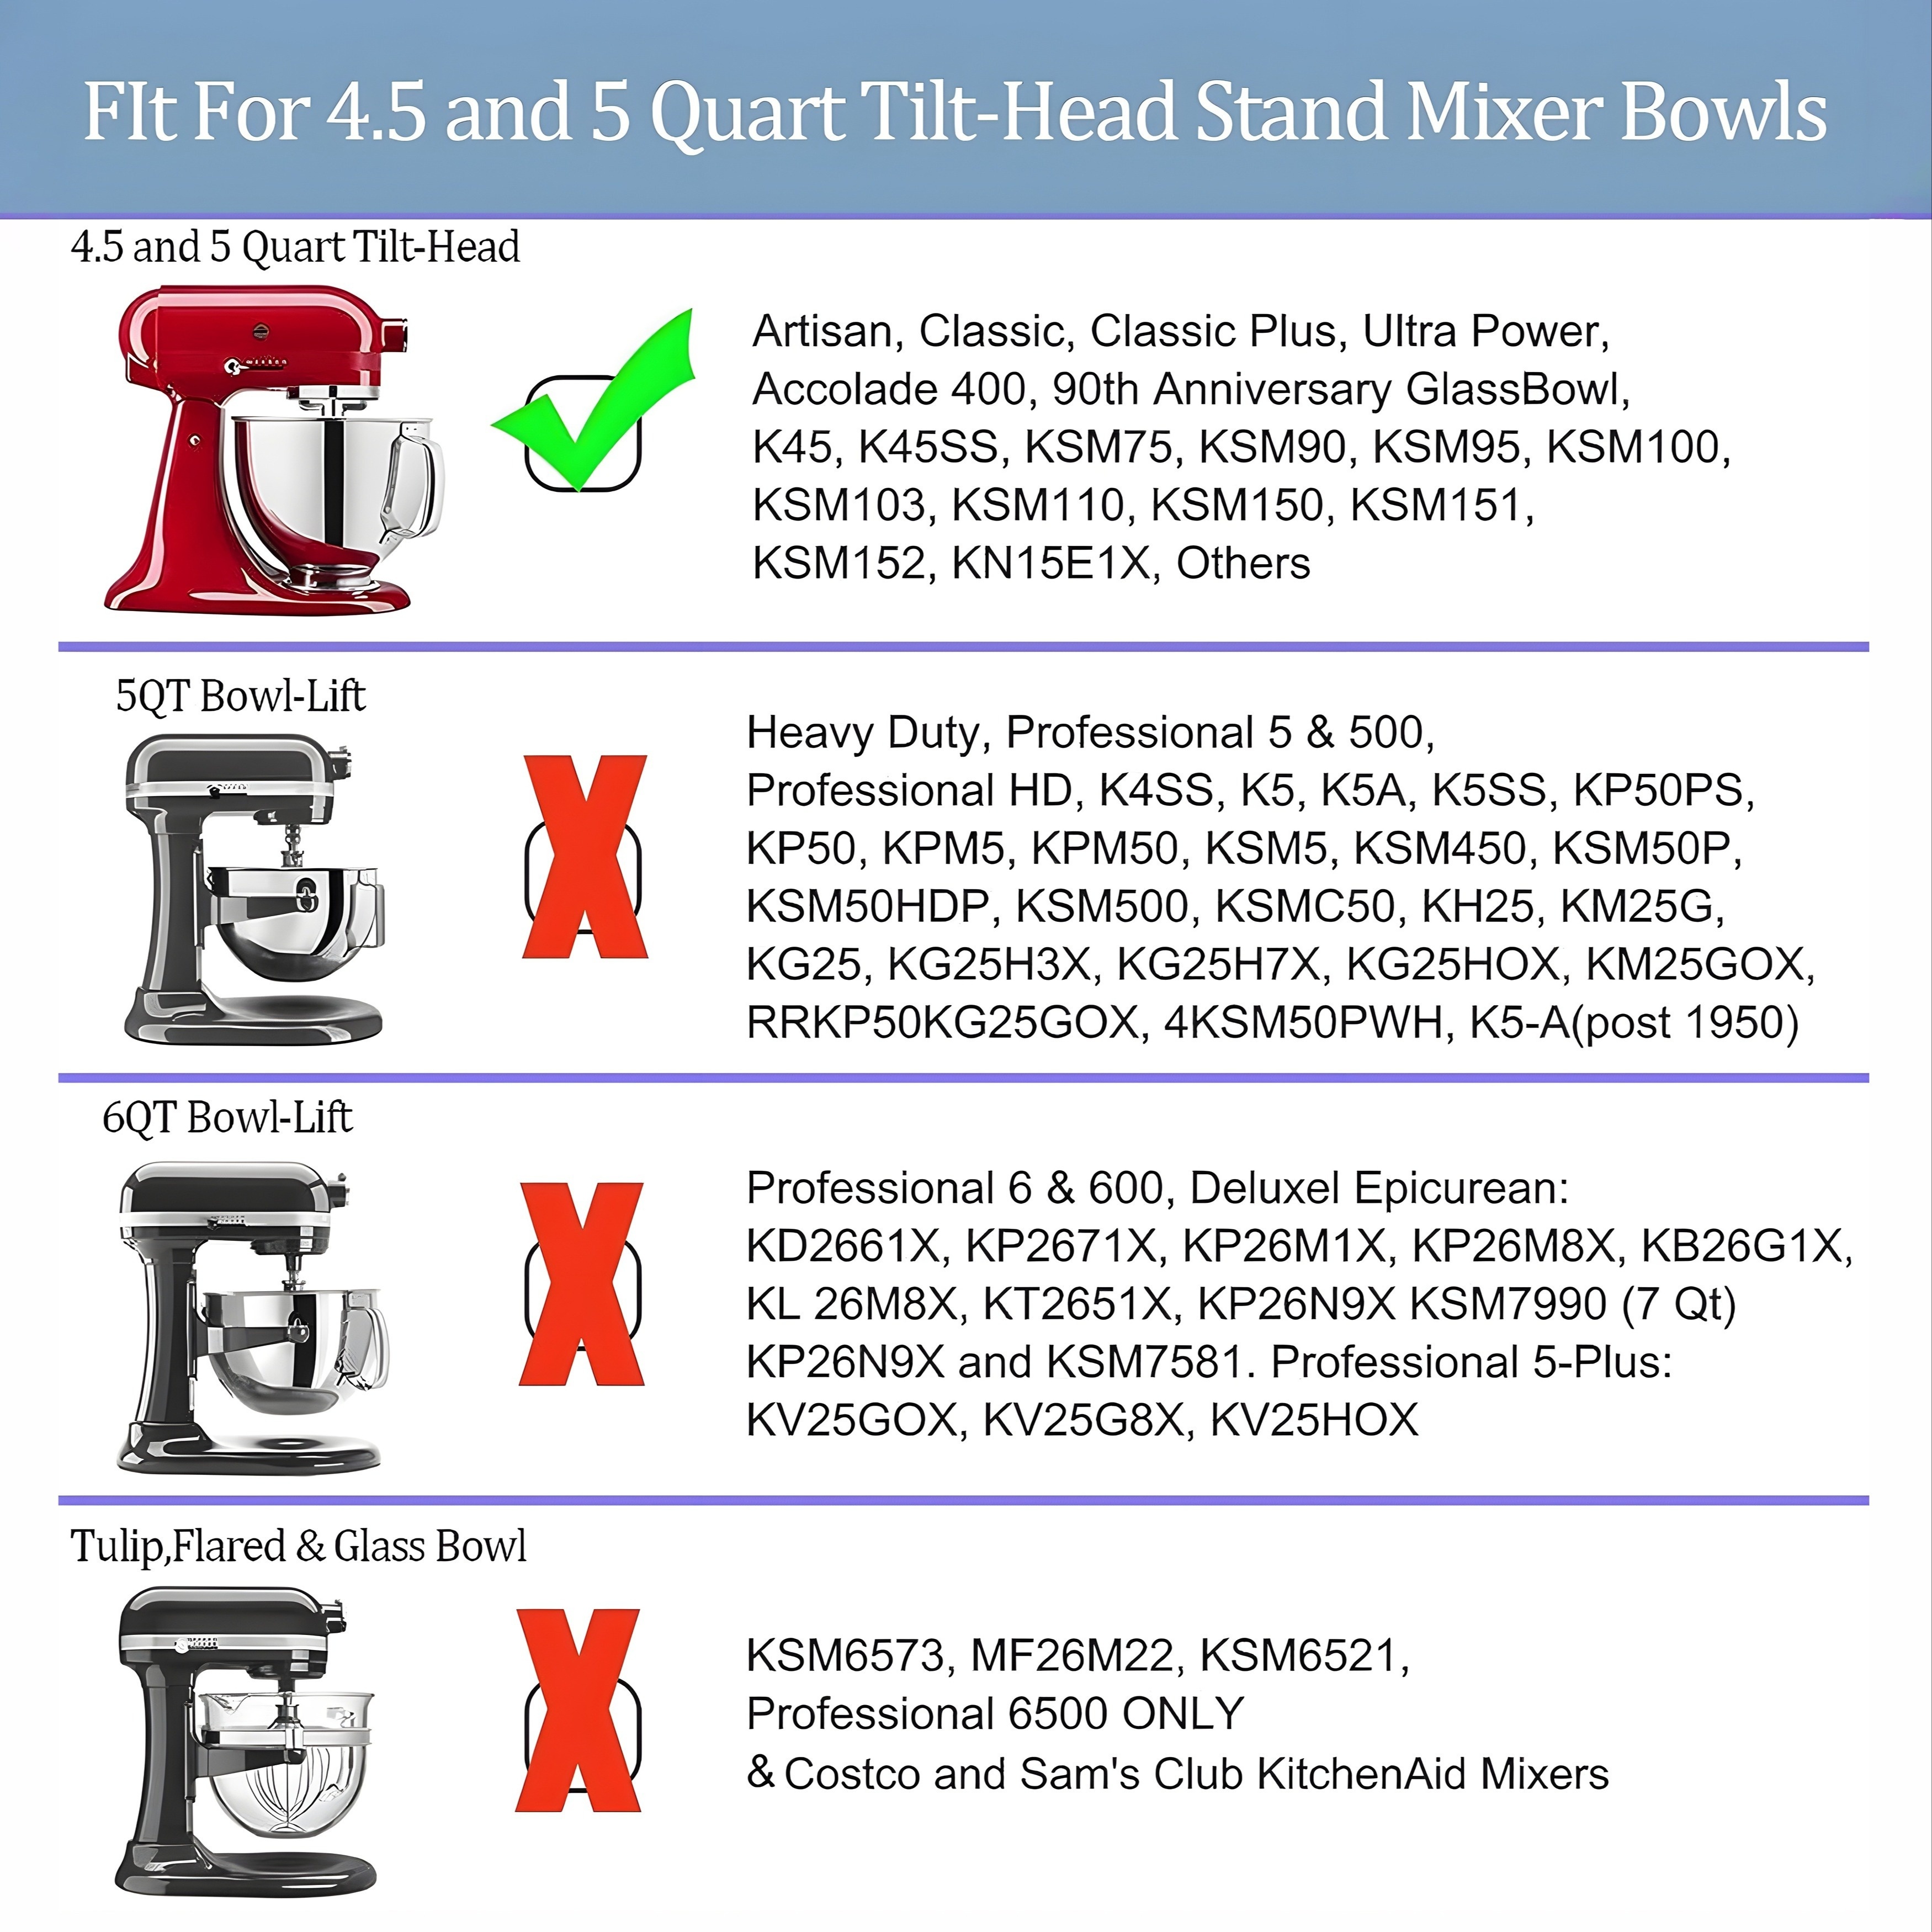 Flex Edge Beater for KitchenAid Tilt-Head Stand Mixer, 4.5-5 Quart Flat Beater  Paddle with Flexible Silicone Edges Bowl Scraper, Compatible with 4.5-5  quart tilt-head stand mixer bowls, fit models: K45, K45SS, KSM1